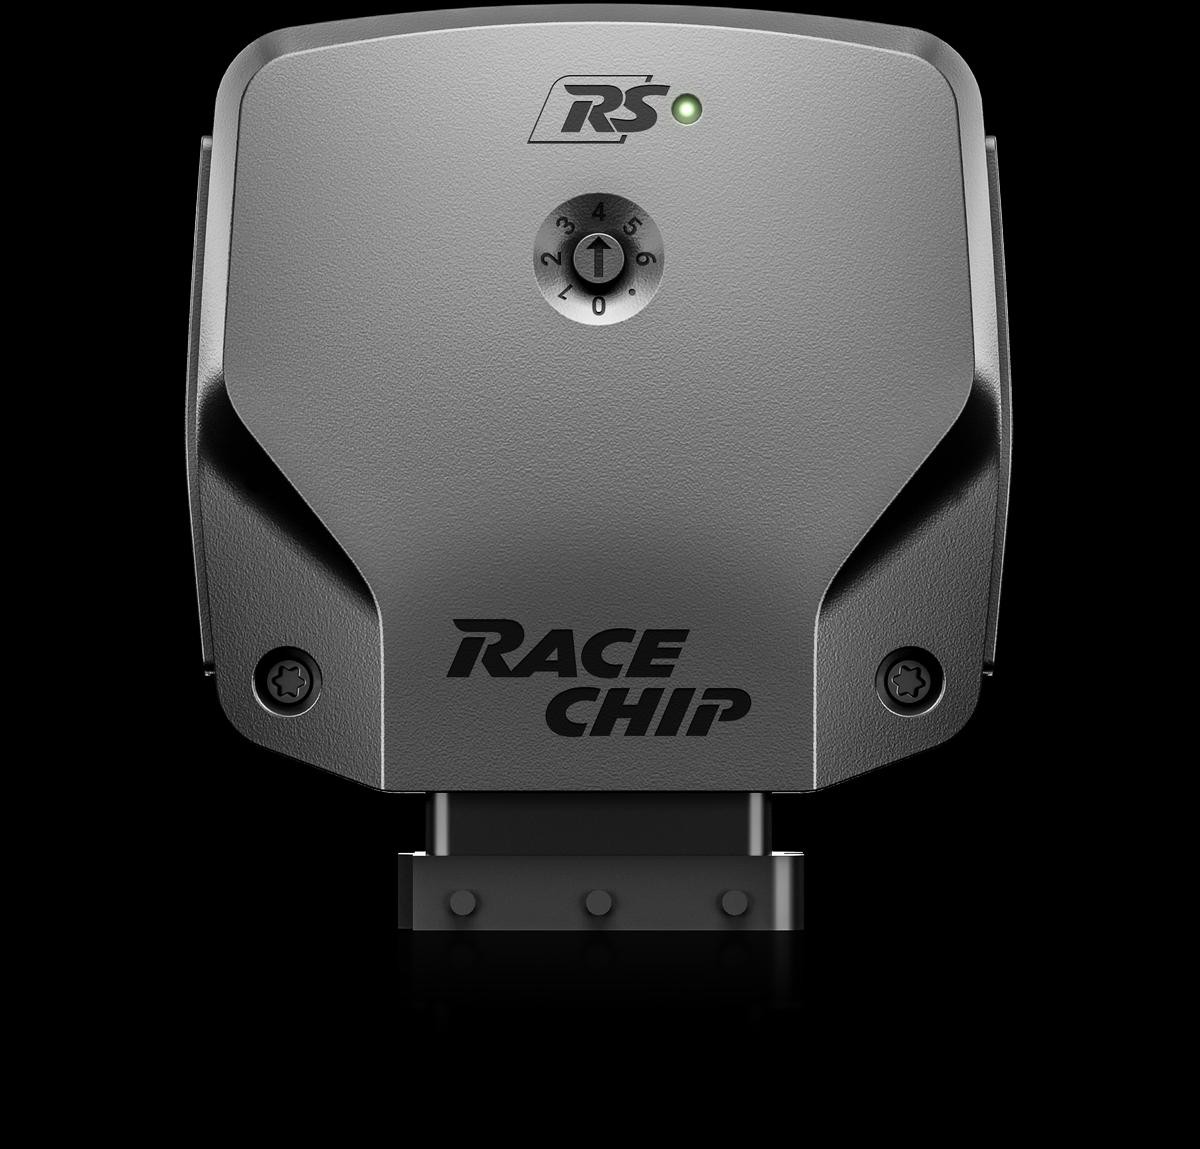 Opel INSIGNIA Chip tuning RaceChip 74652212 cheap